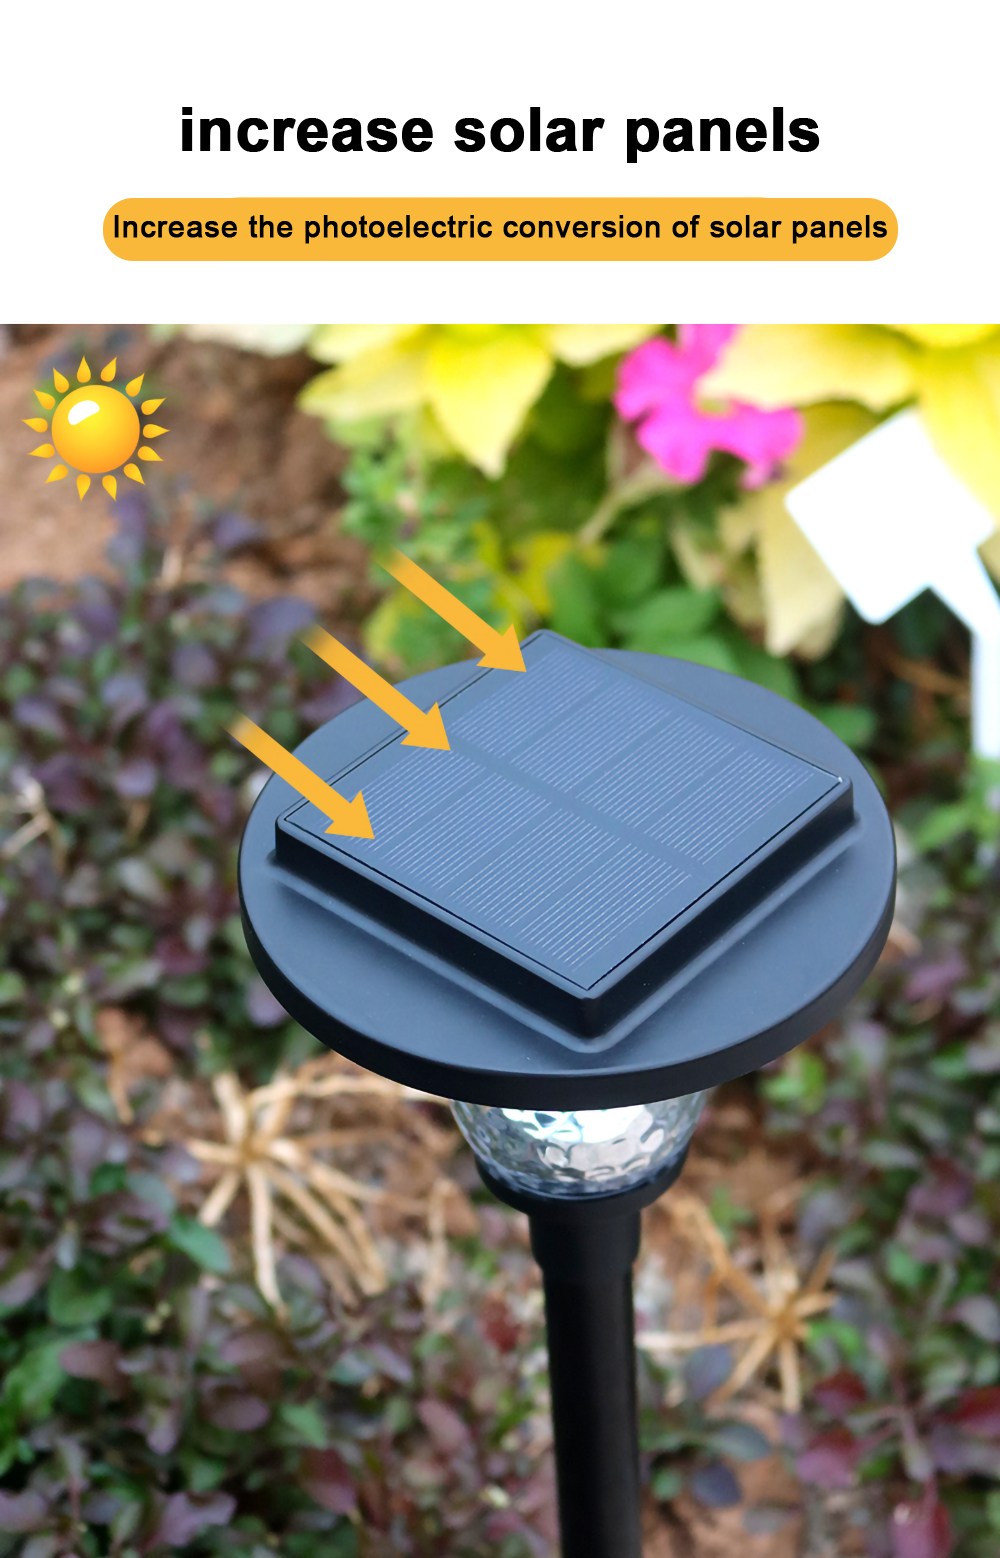 IP65 Waterproof Solar Garden Light, Buy 2 Get Free Shipping